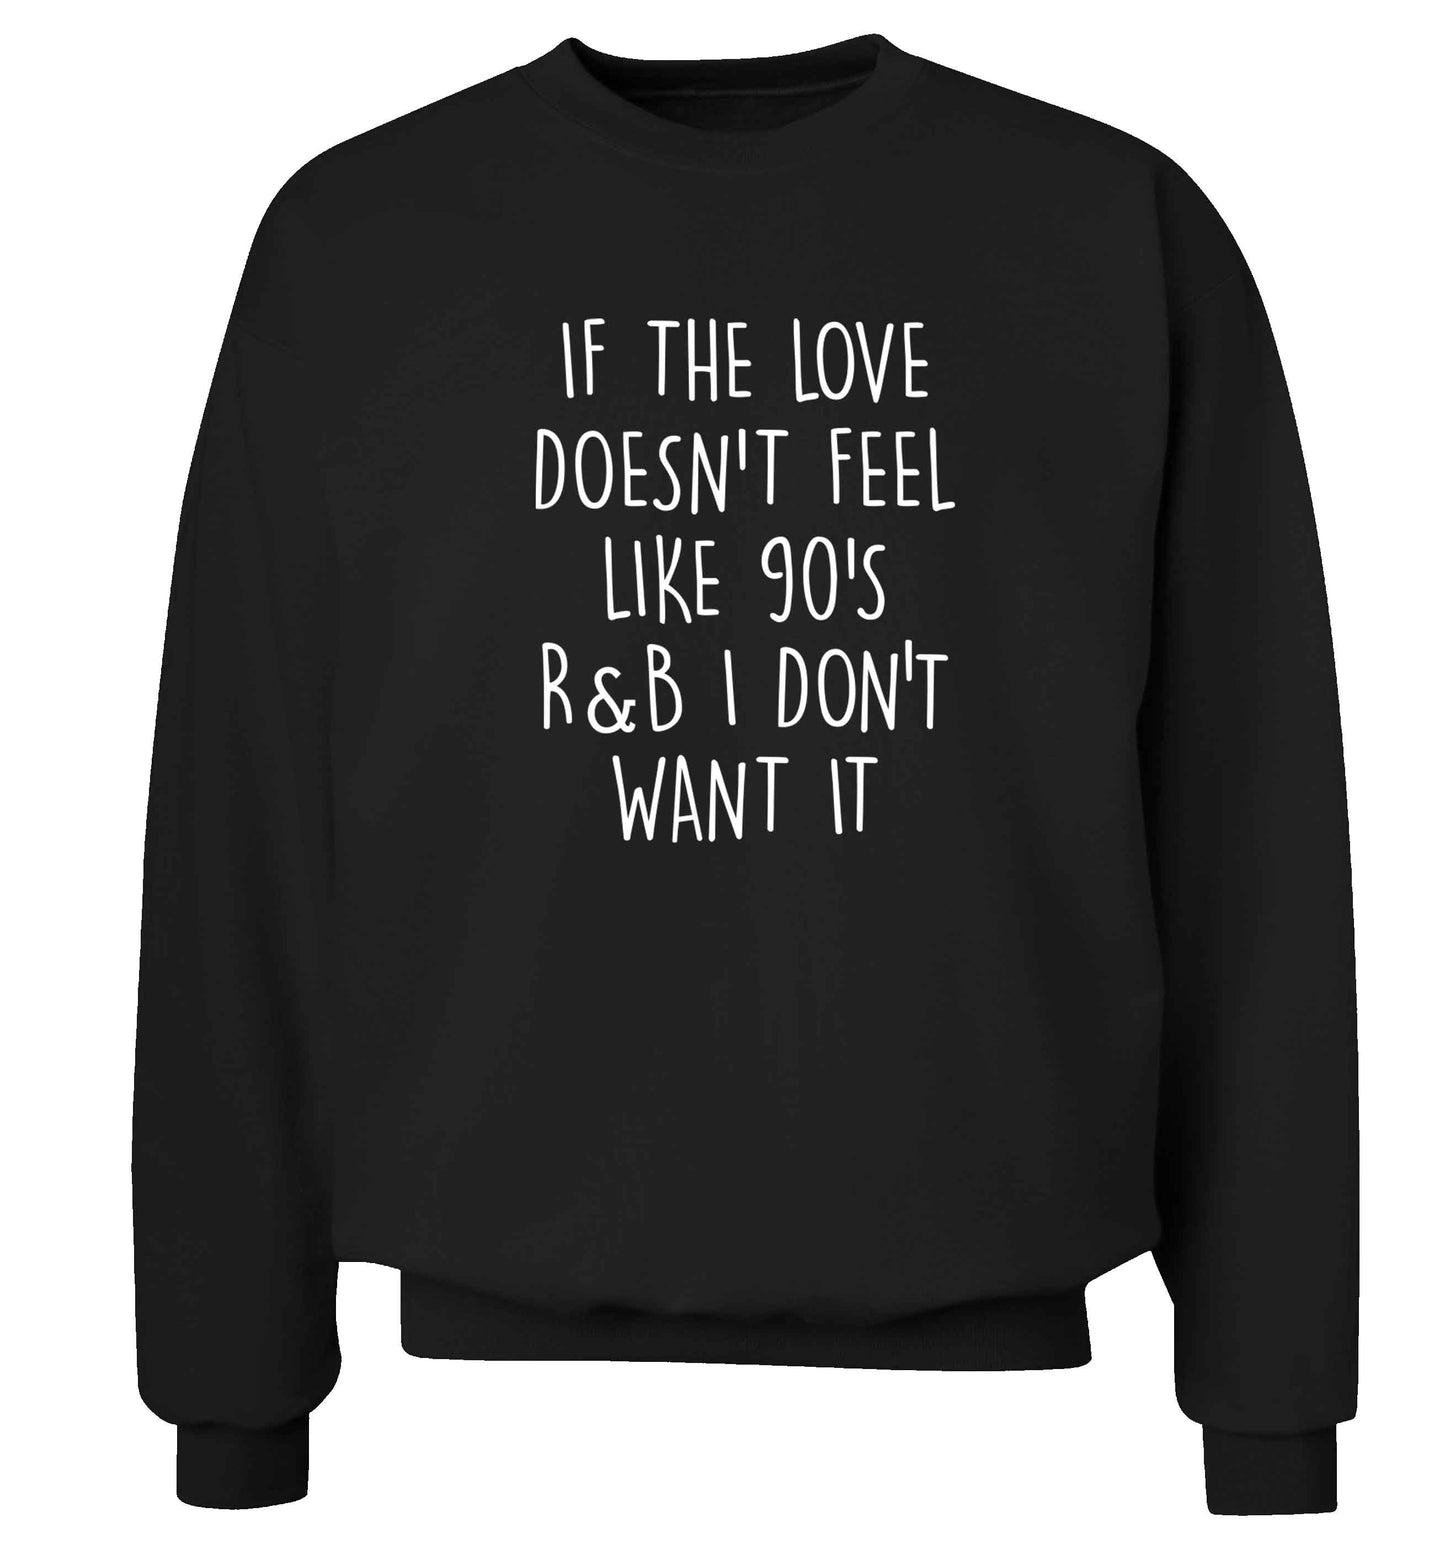 If the love doesn't feel like 90's r&b I don't want it adult's unisex black sweater 2XL